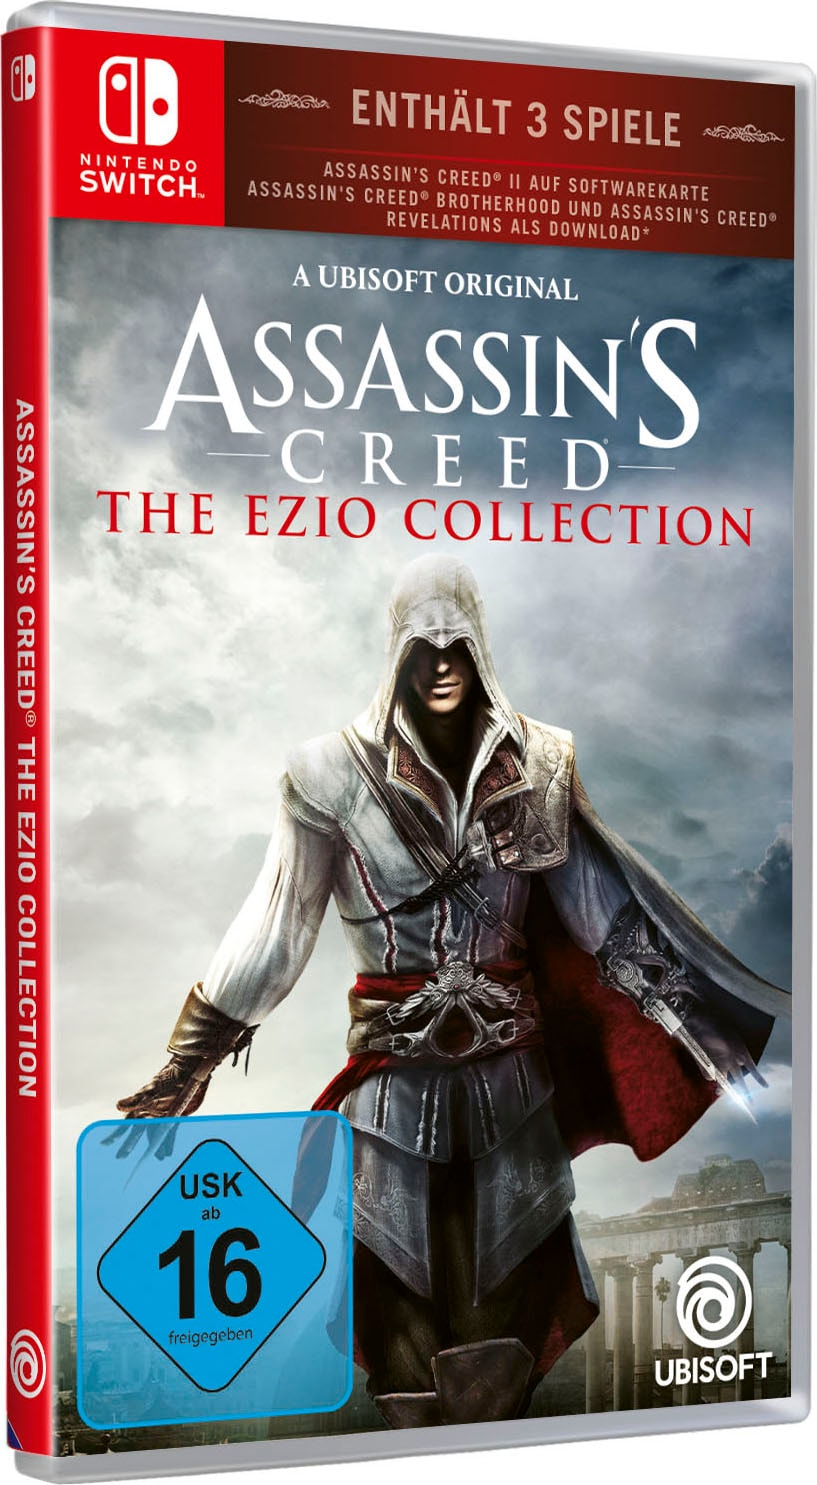 Assassin's Creed Nintendo Switch. Assassins Creed Ezio collection Nintendo Switch. Assassin’s Creed the Ezio collection. Assassins Creed Ezio collection ps4.